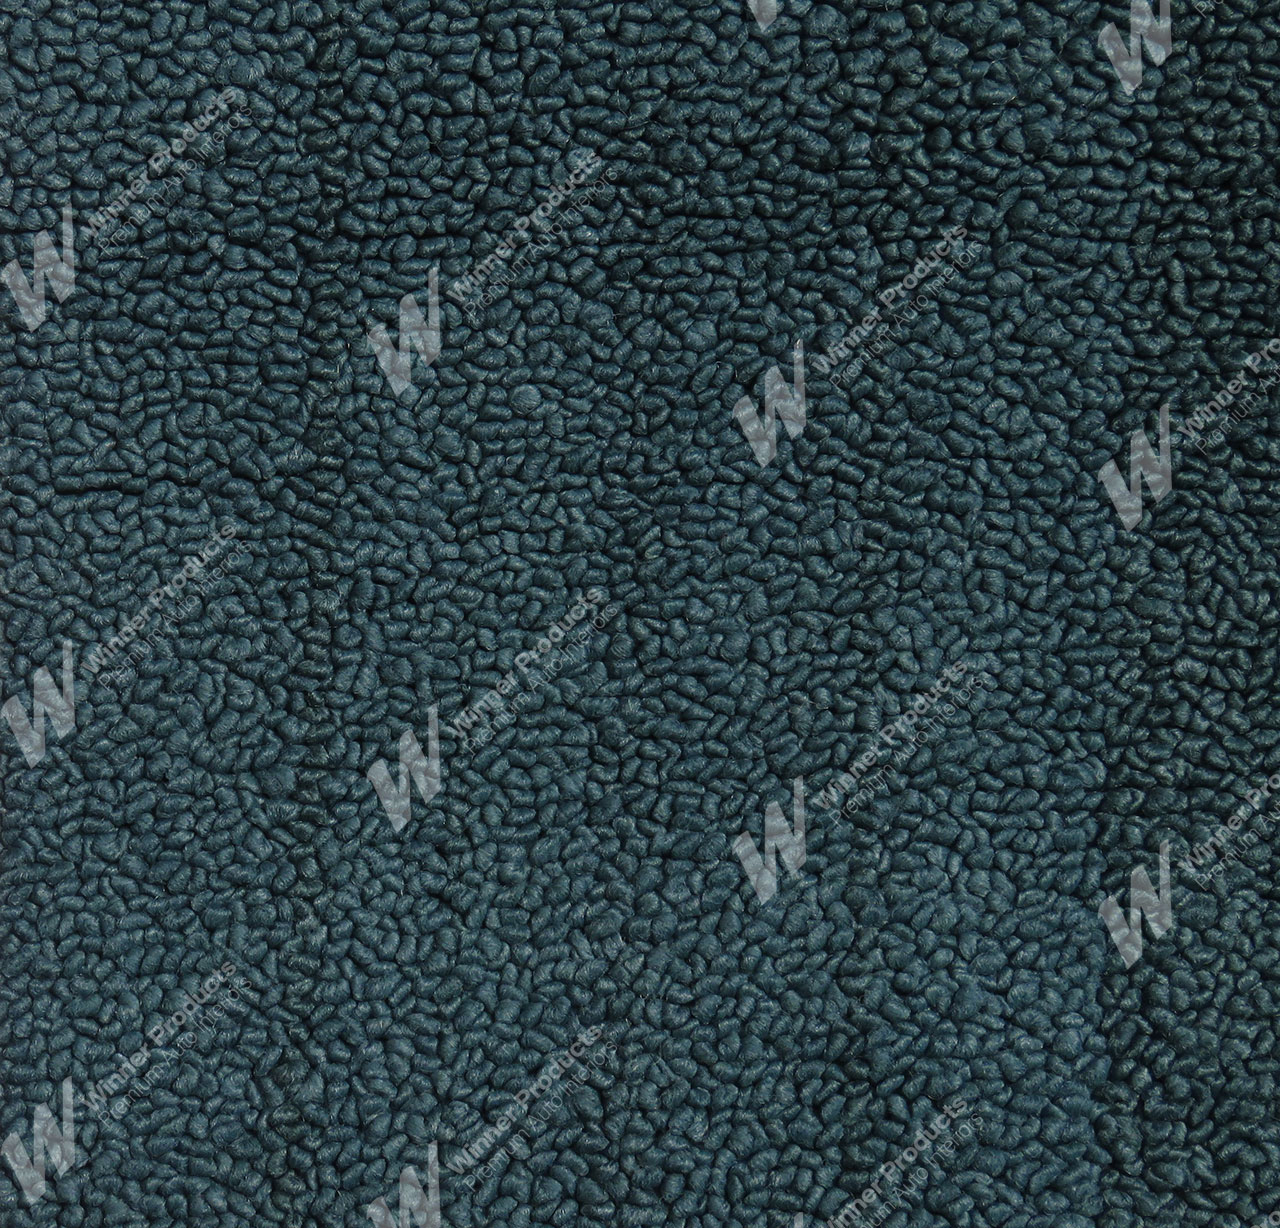 Holden Kingswood HT Kingswood Wagon 13E Turquoise Mist Carpet (Image 1 of 1)